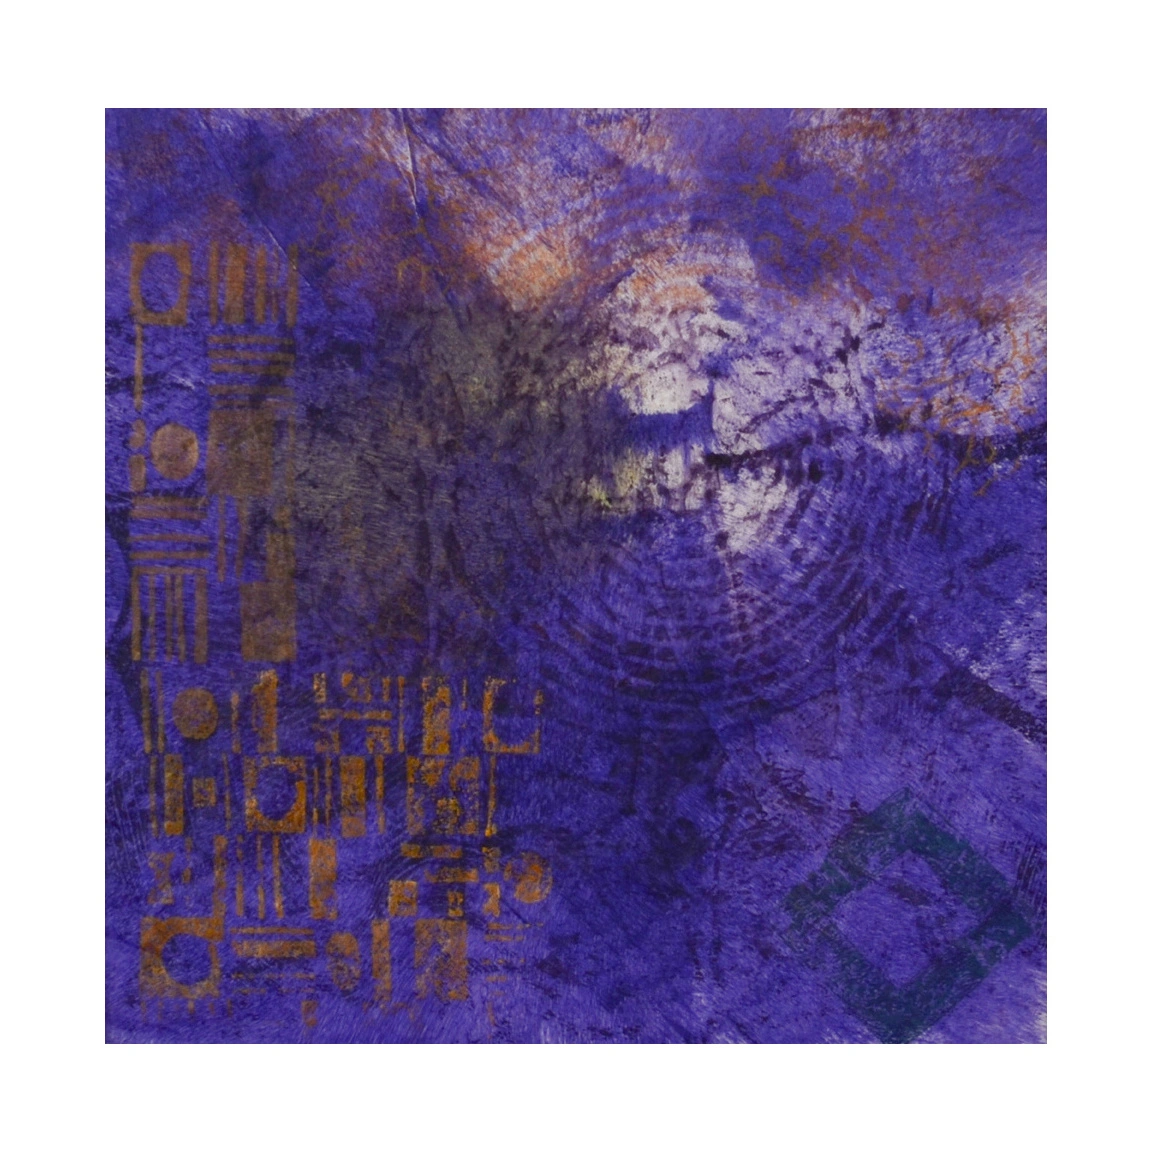 Labyrinth, 12 x 12, acrylic on paper